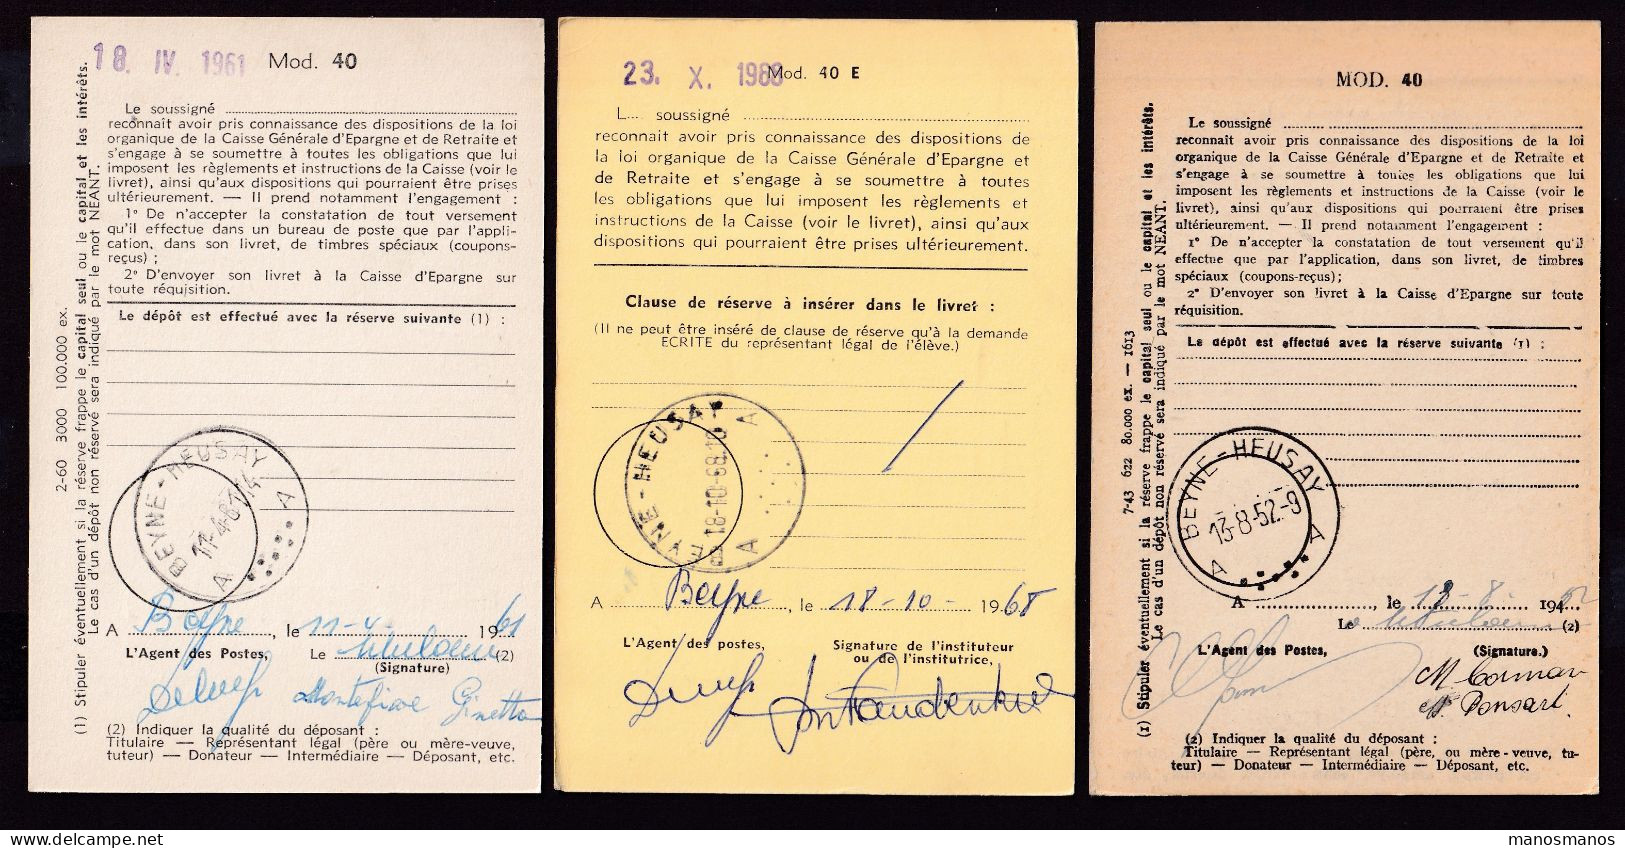 DDFF 552 -- BEYNE-HEUSAY - 3 X Carte De Caisse D'Epargne Postale/Postspaarkaskaart 1952/1968 - 2 X Grande Griffe - Zonder Portkosten